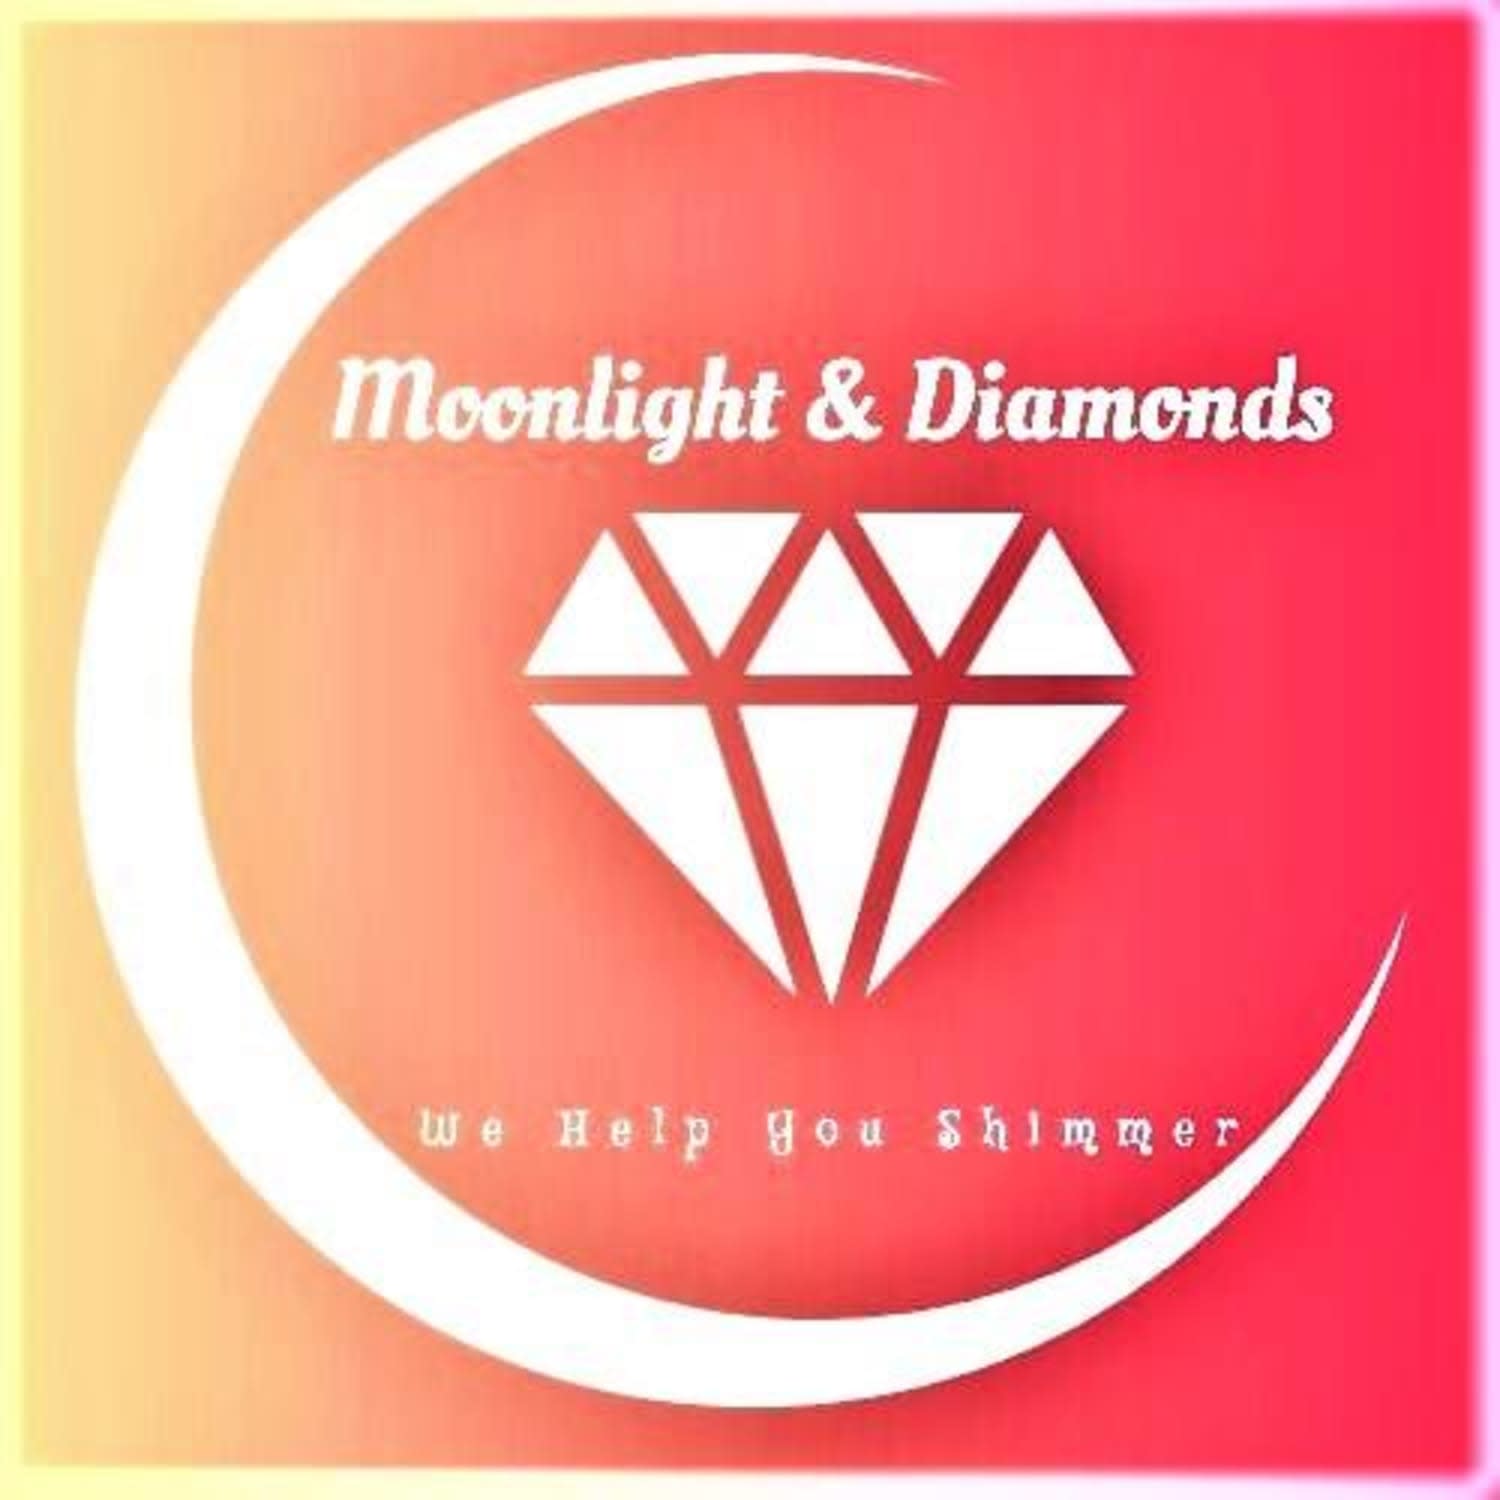 Moonlight & Diamonds